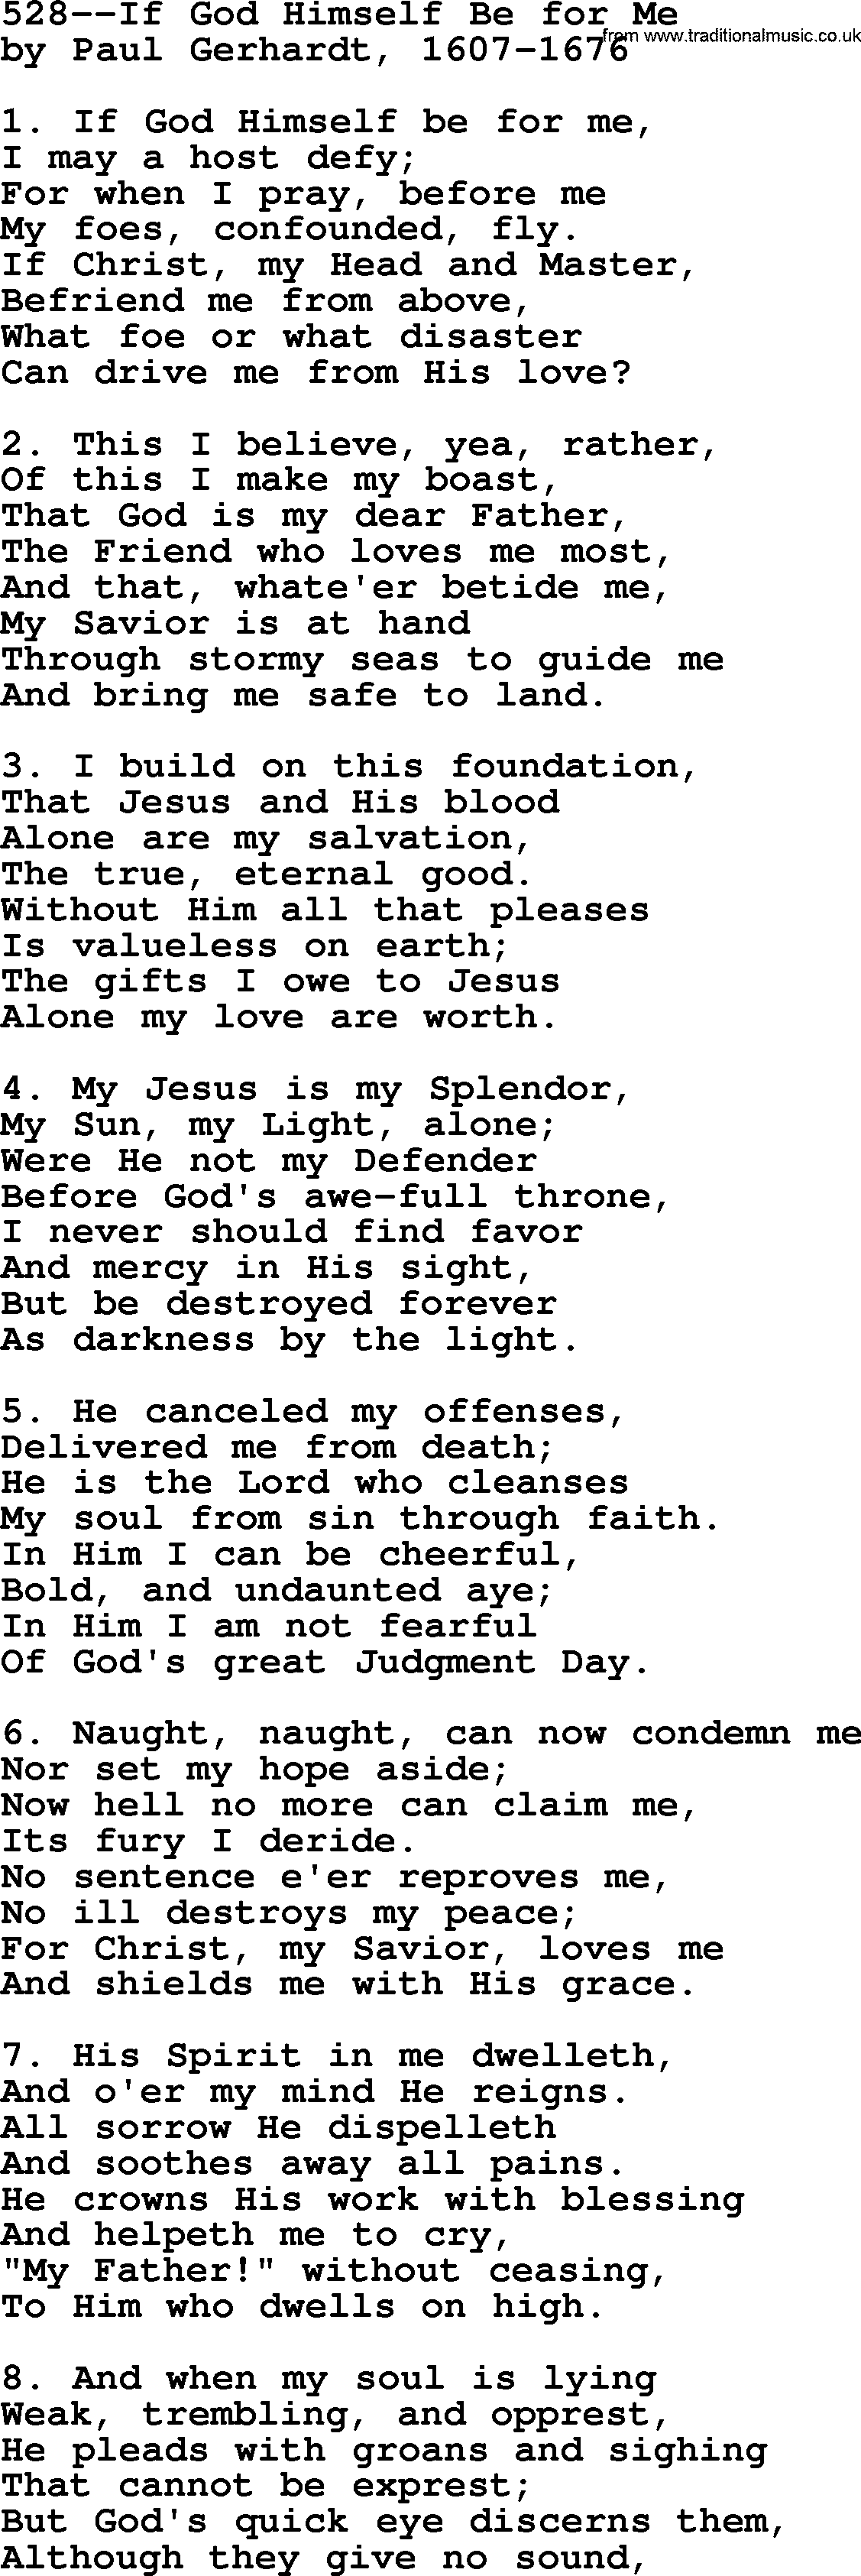 Lutheran Hymn: 528--If God Himself Be for Me.txt lyrics with PDF